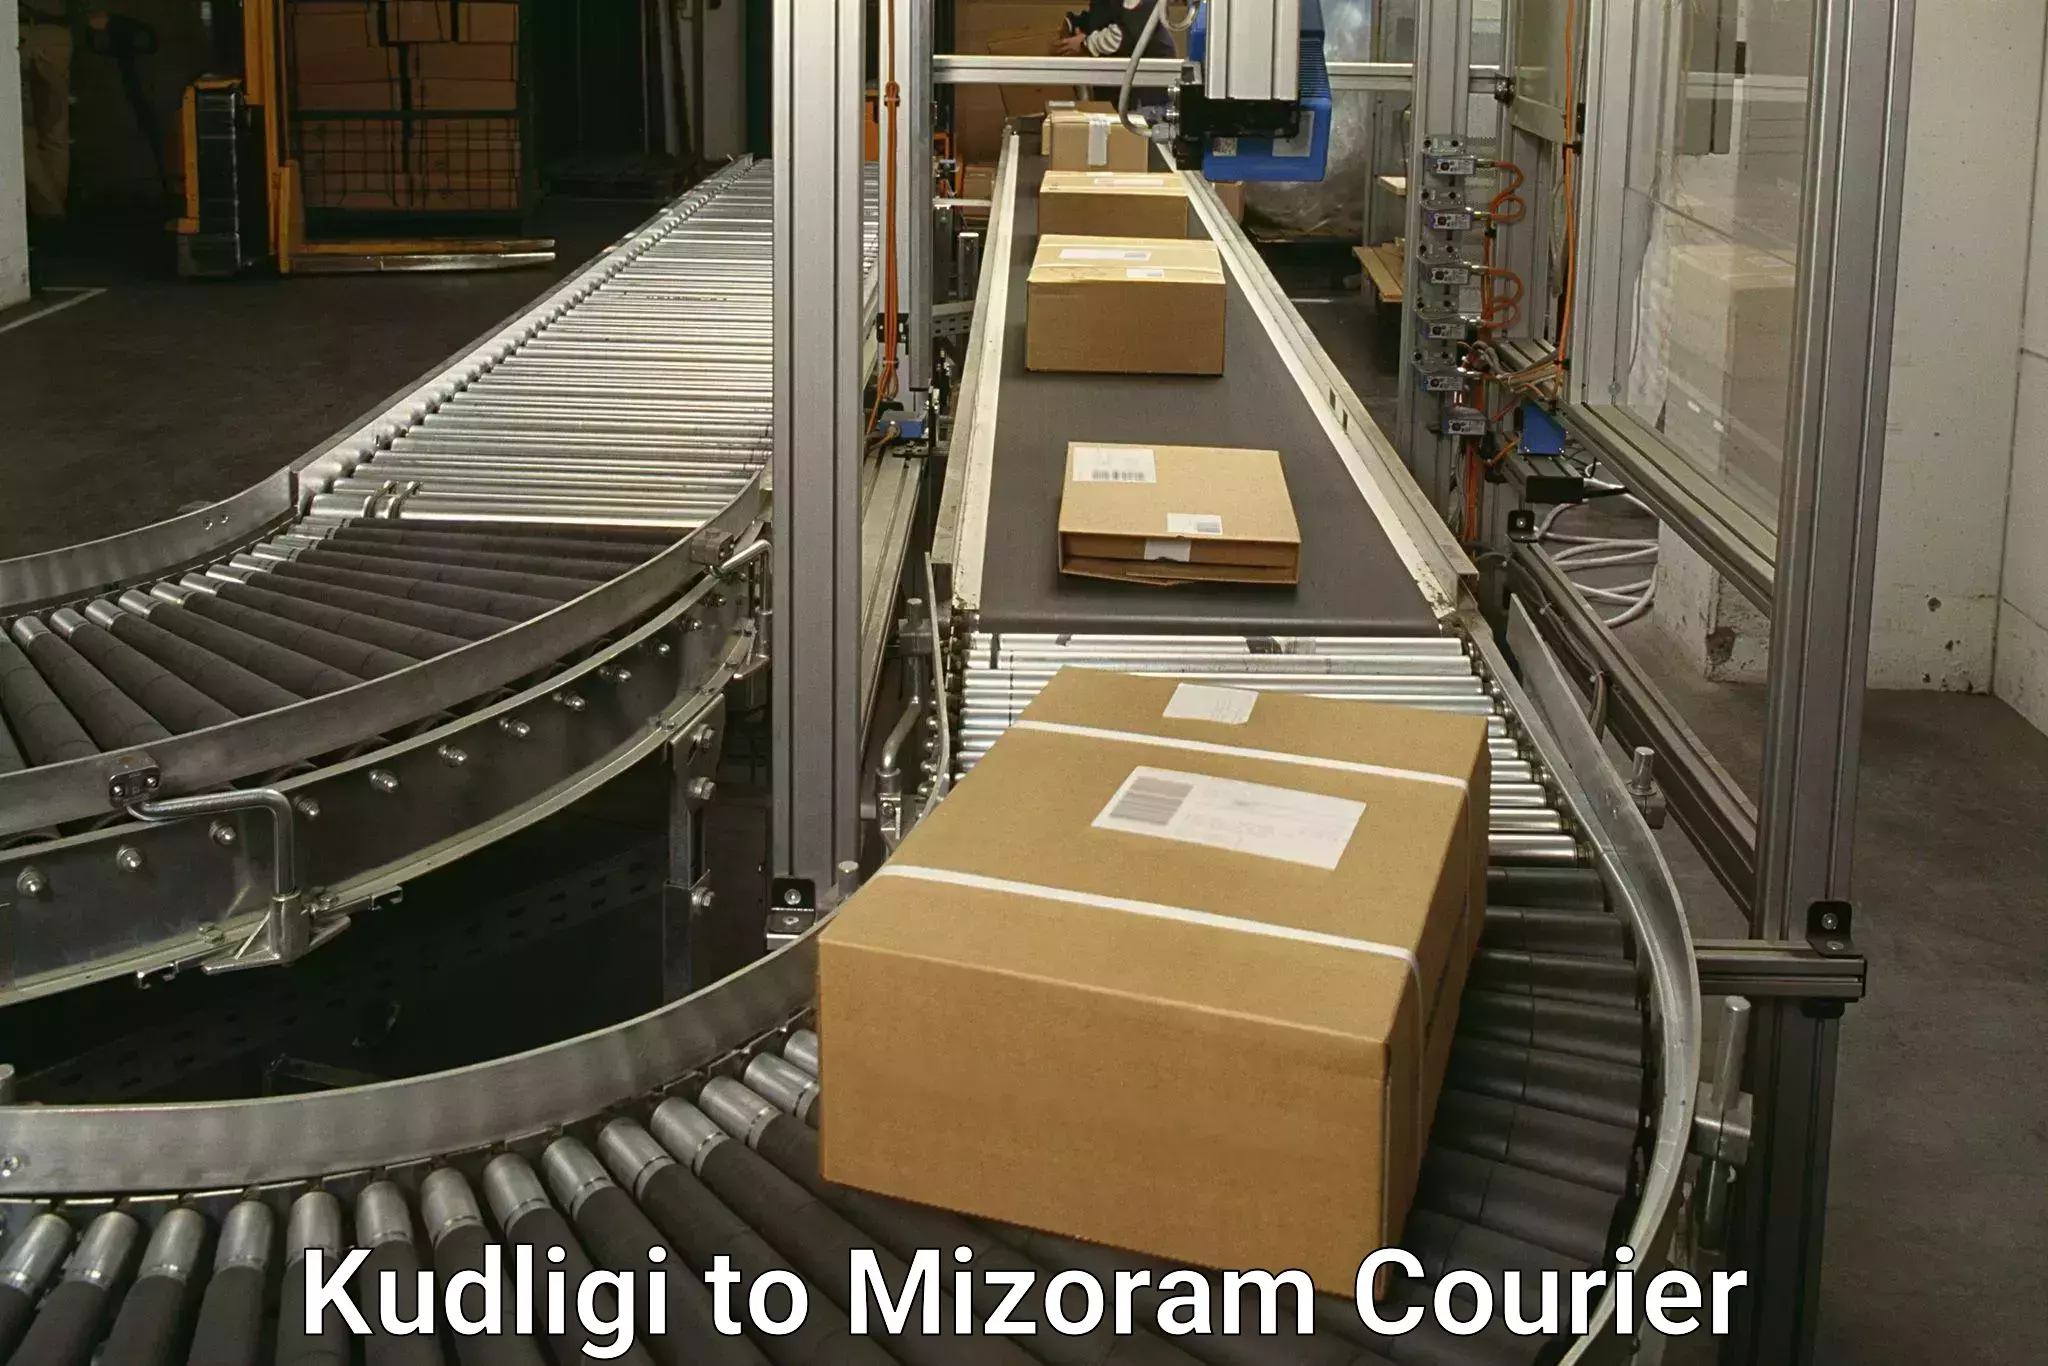 State-of-the-art courier technology Kudligi to Saiha